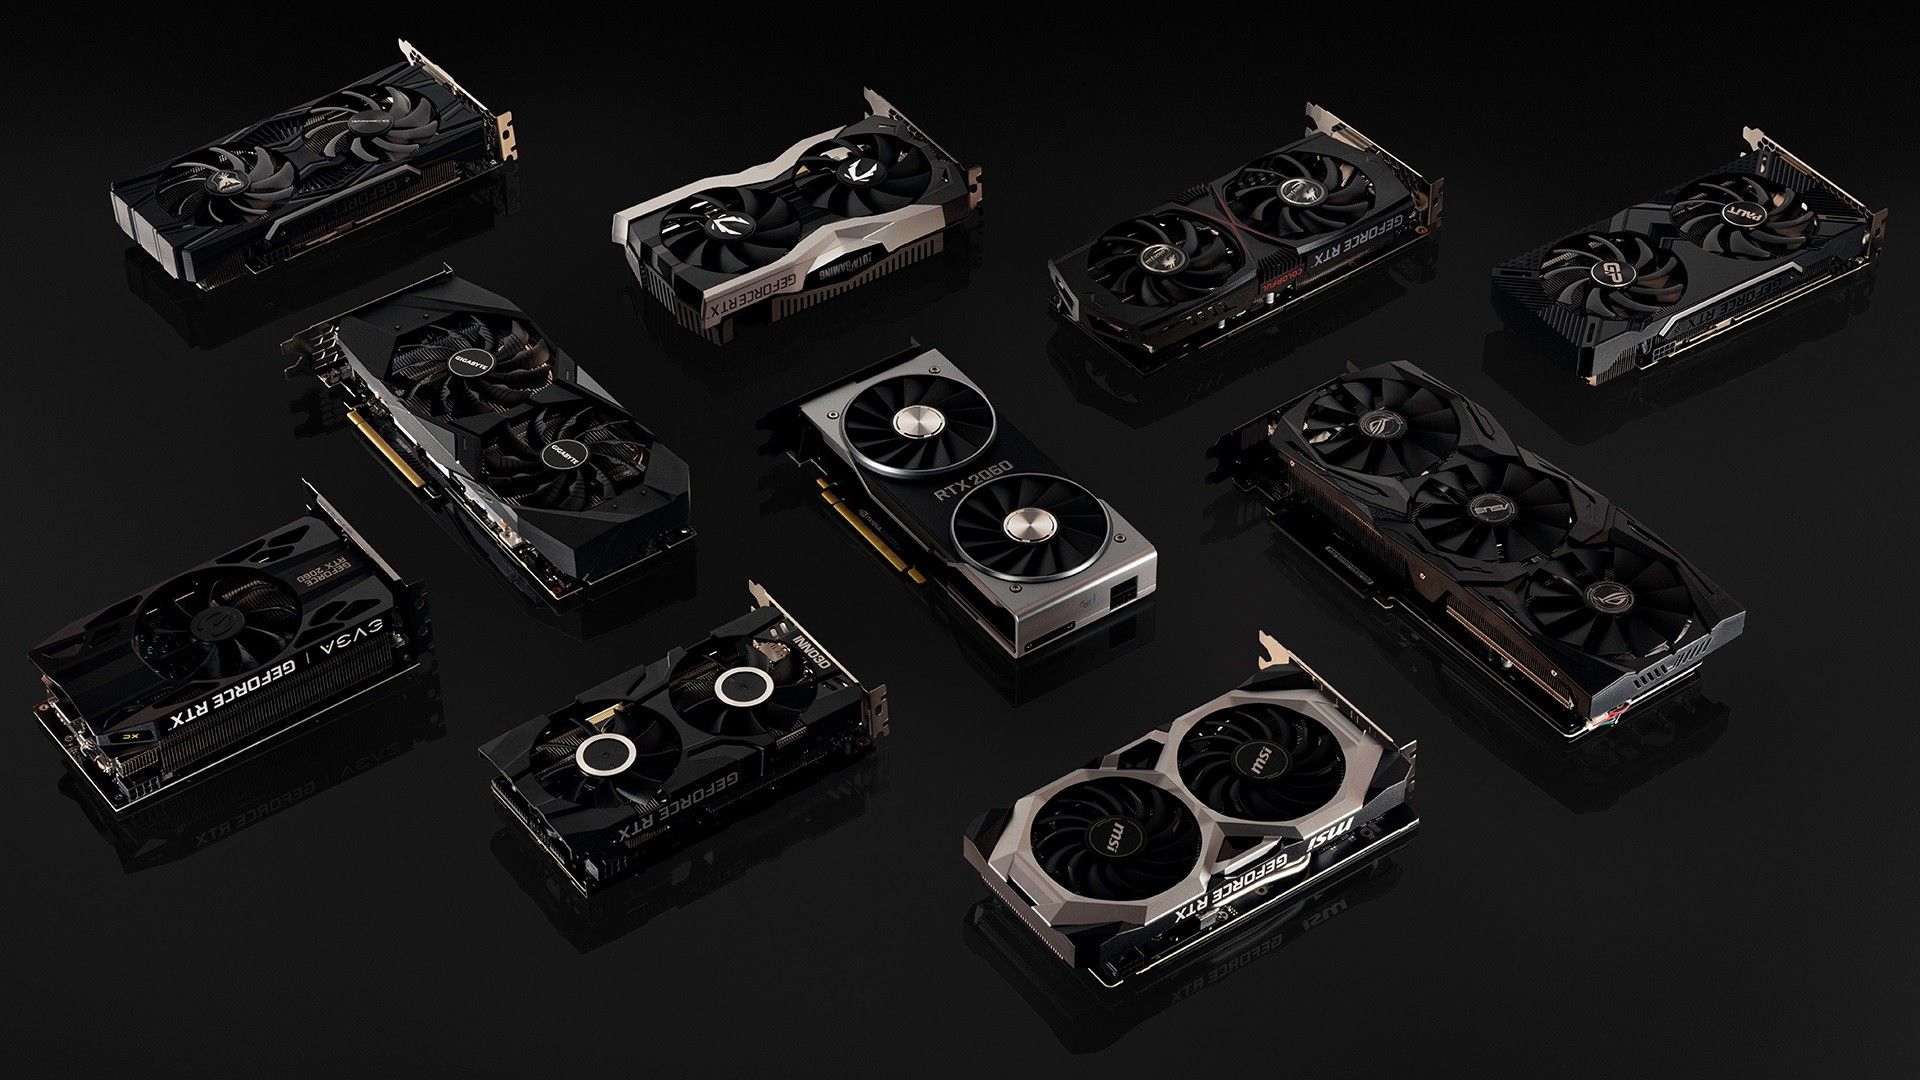 Nvidia Announces The Mid Range RTX 2060 GPU For Desktops